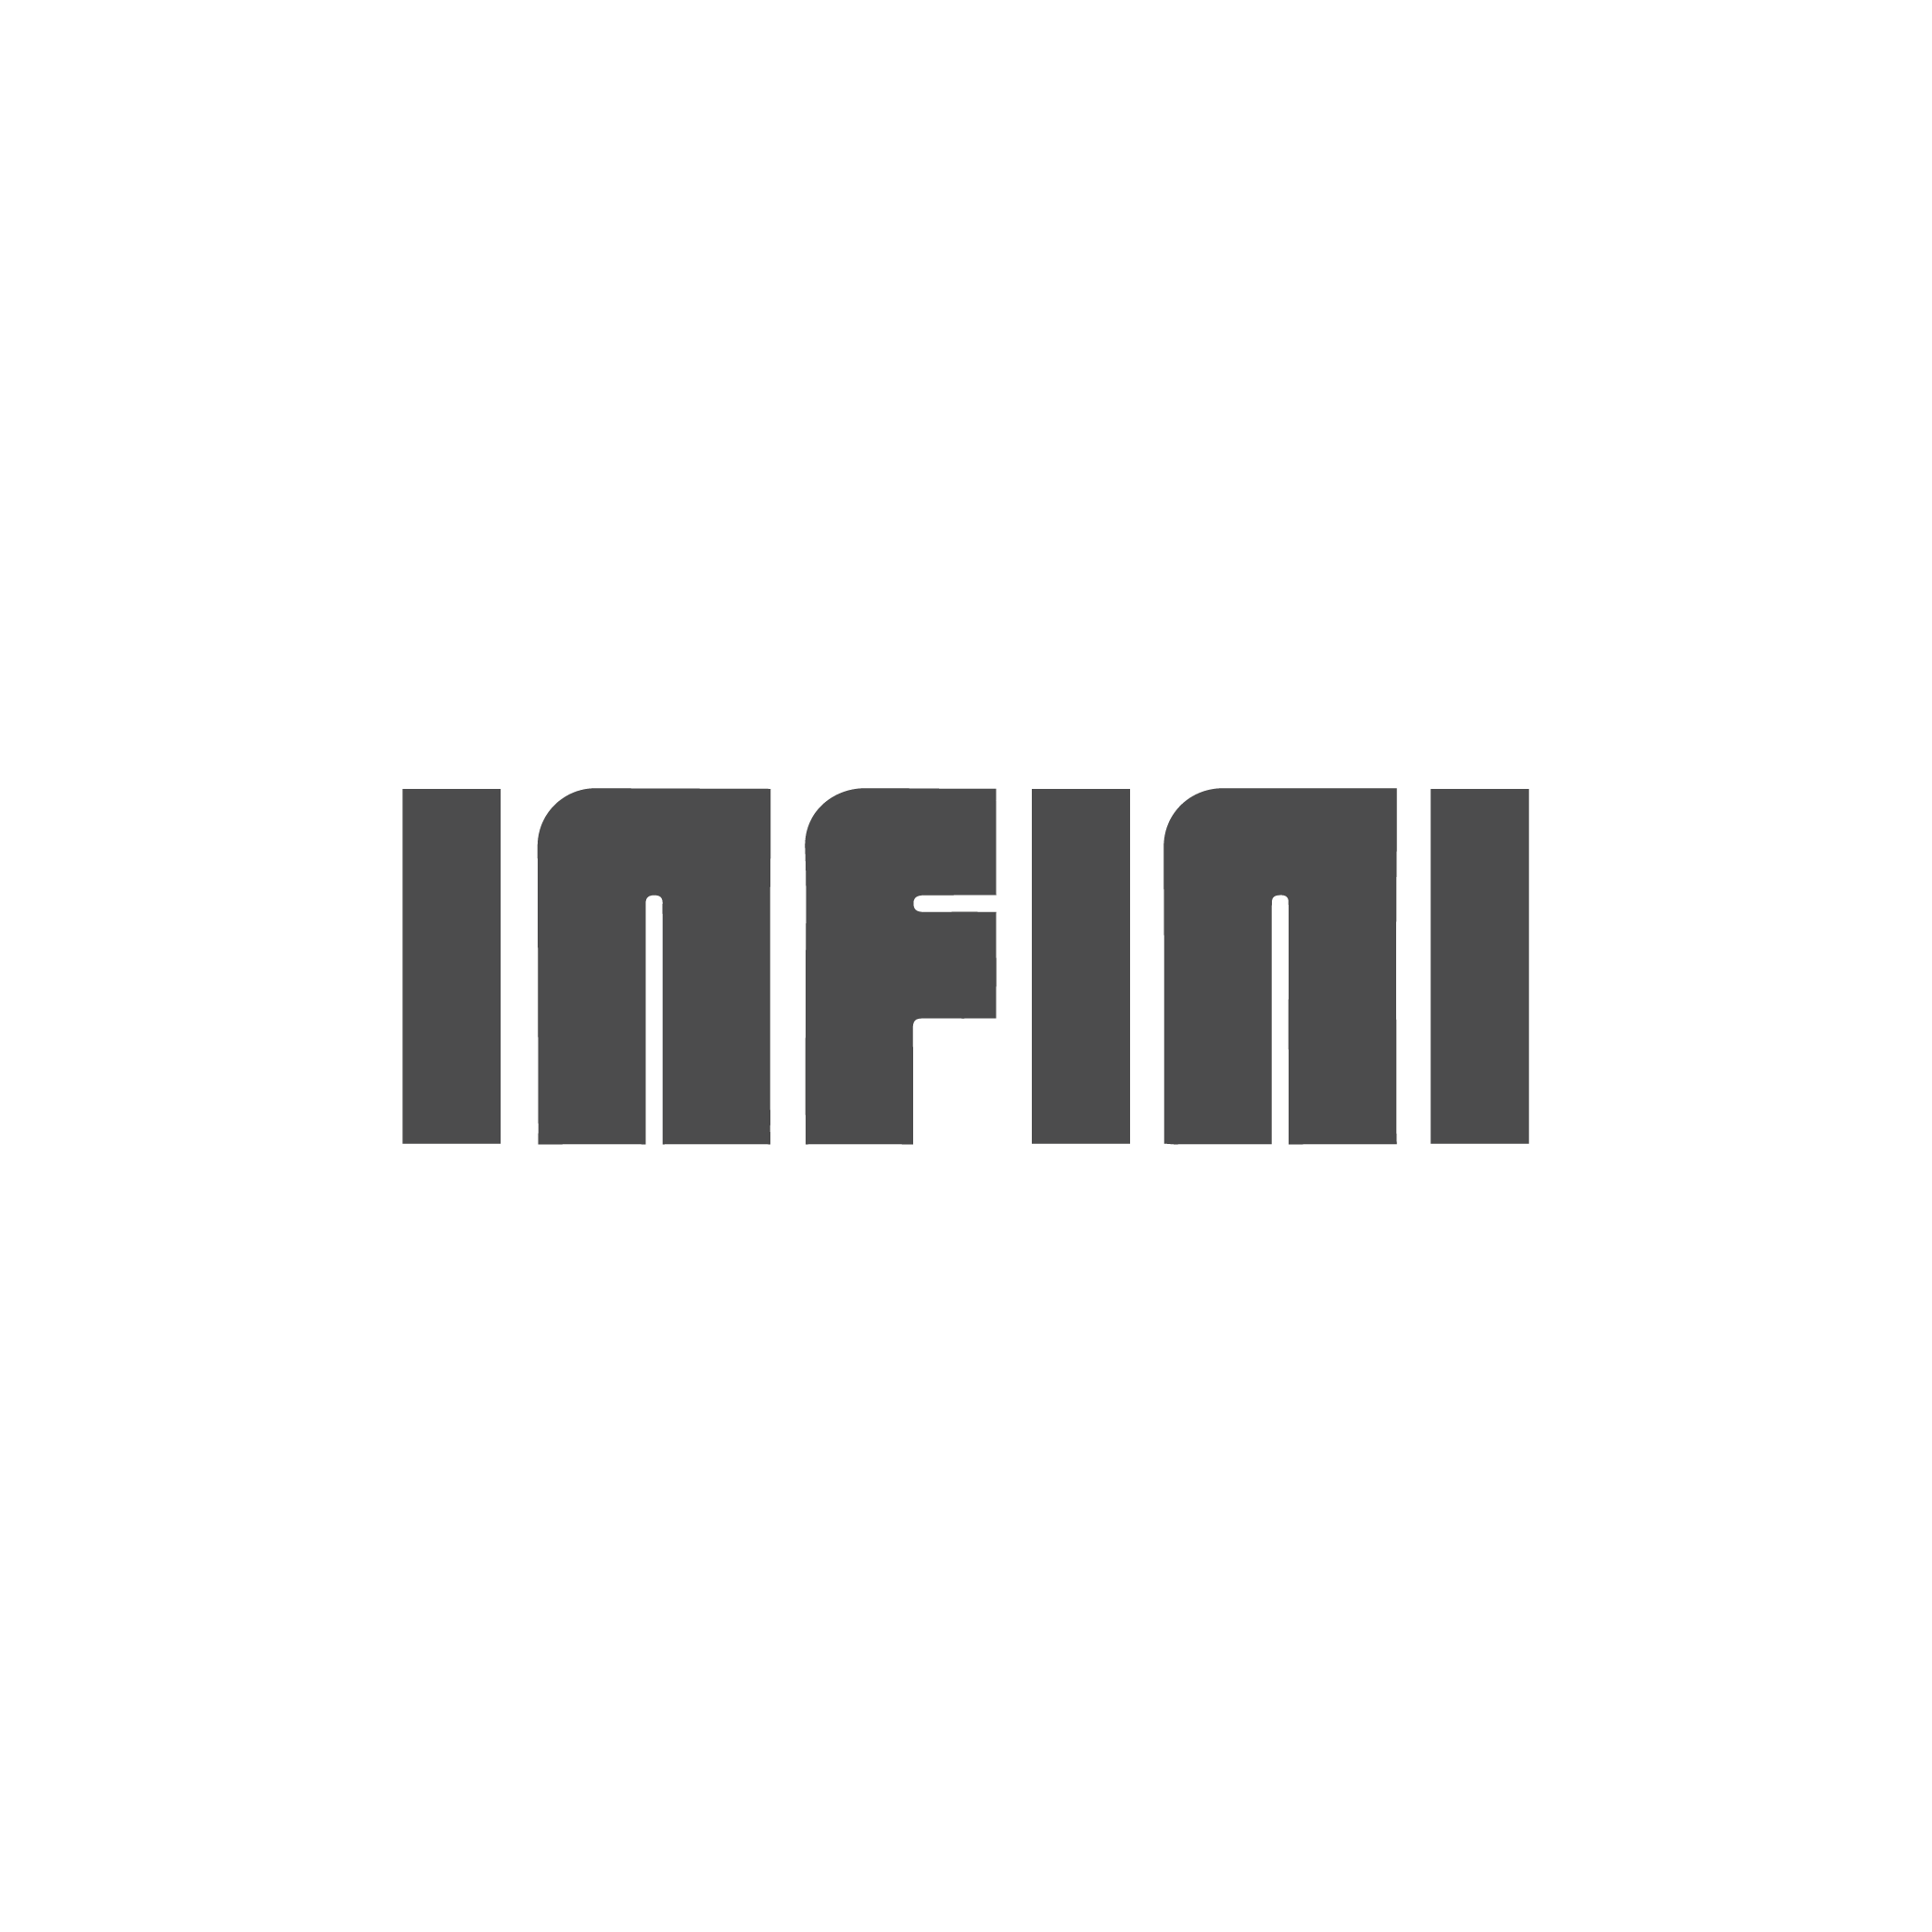 Infini